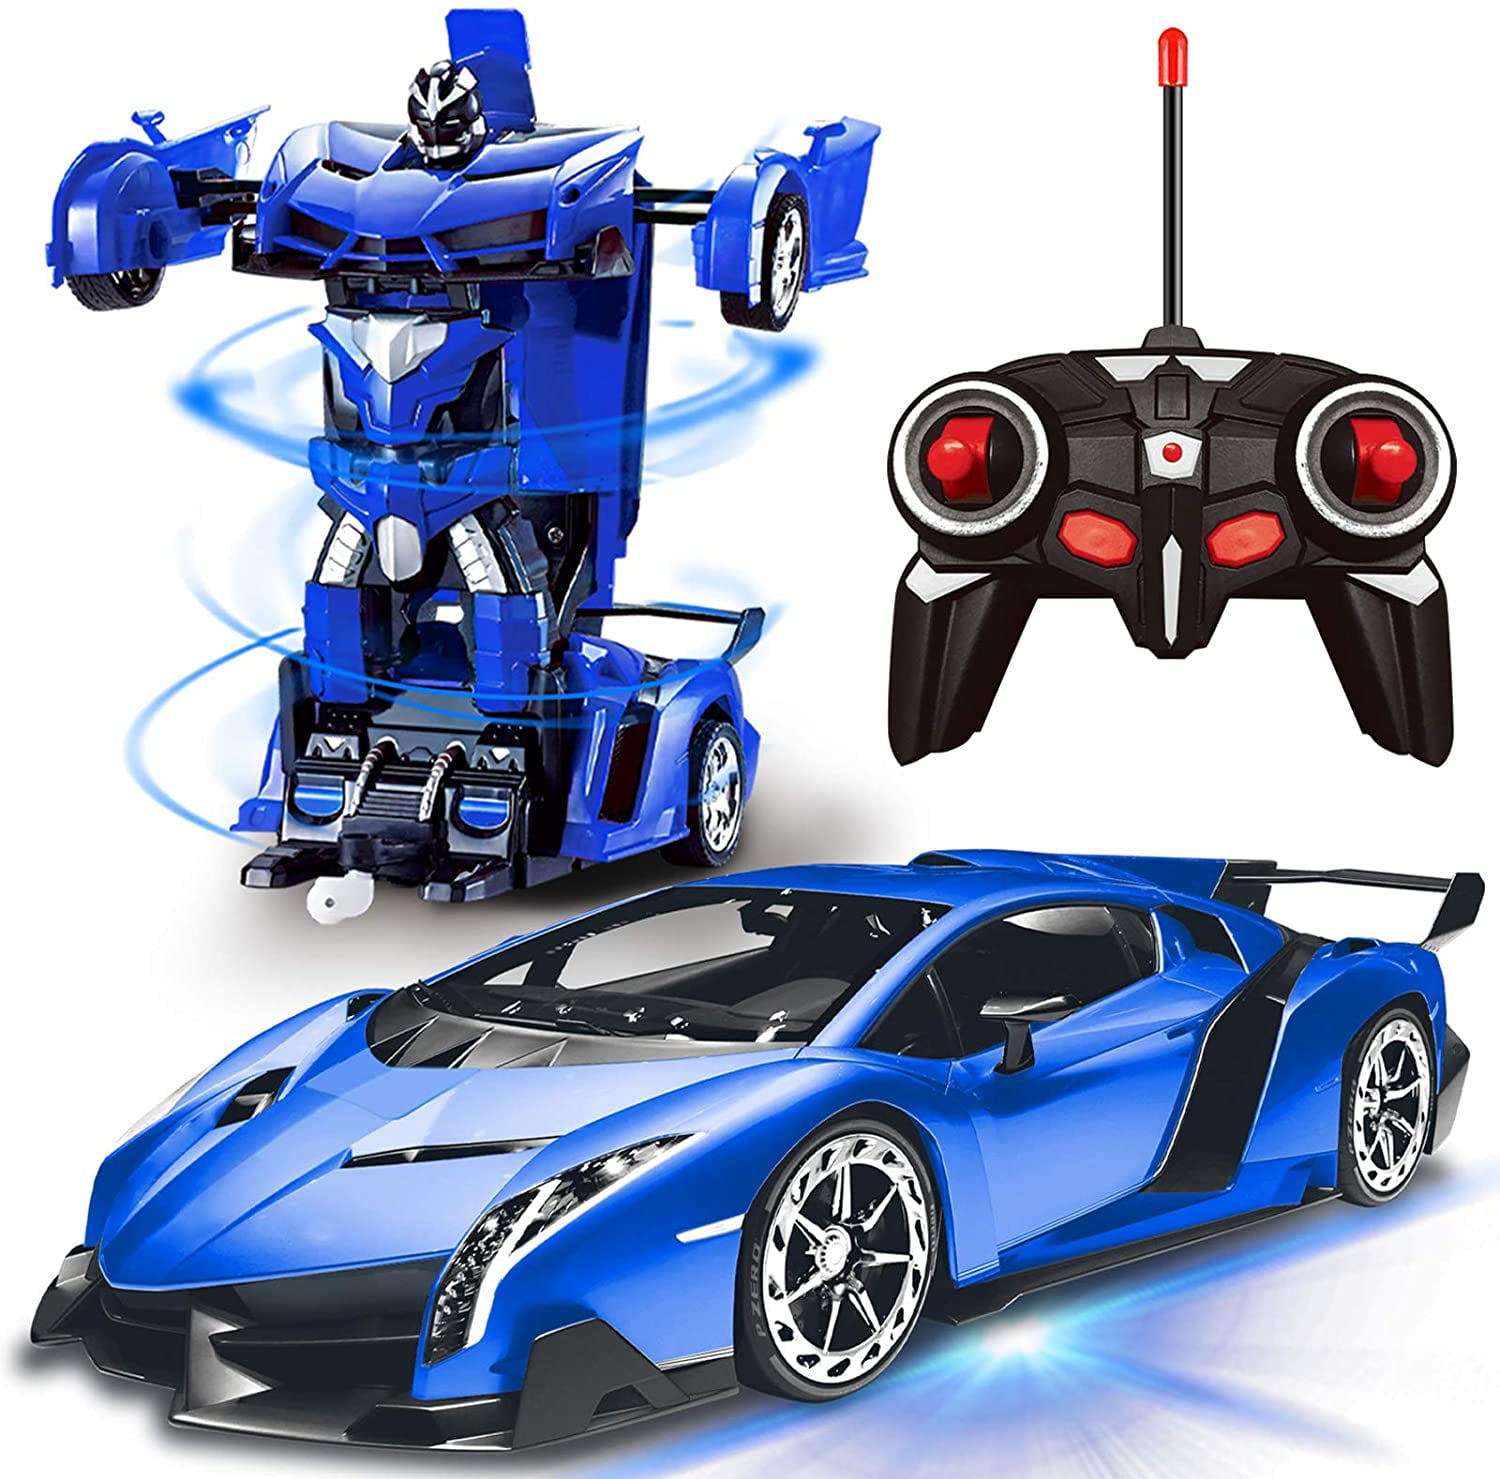 1:18 Transformer RC Sport Robot Car Remote Control 2in1 Kids Boys Toy Model Gift 